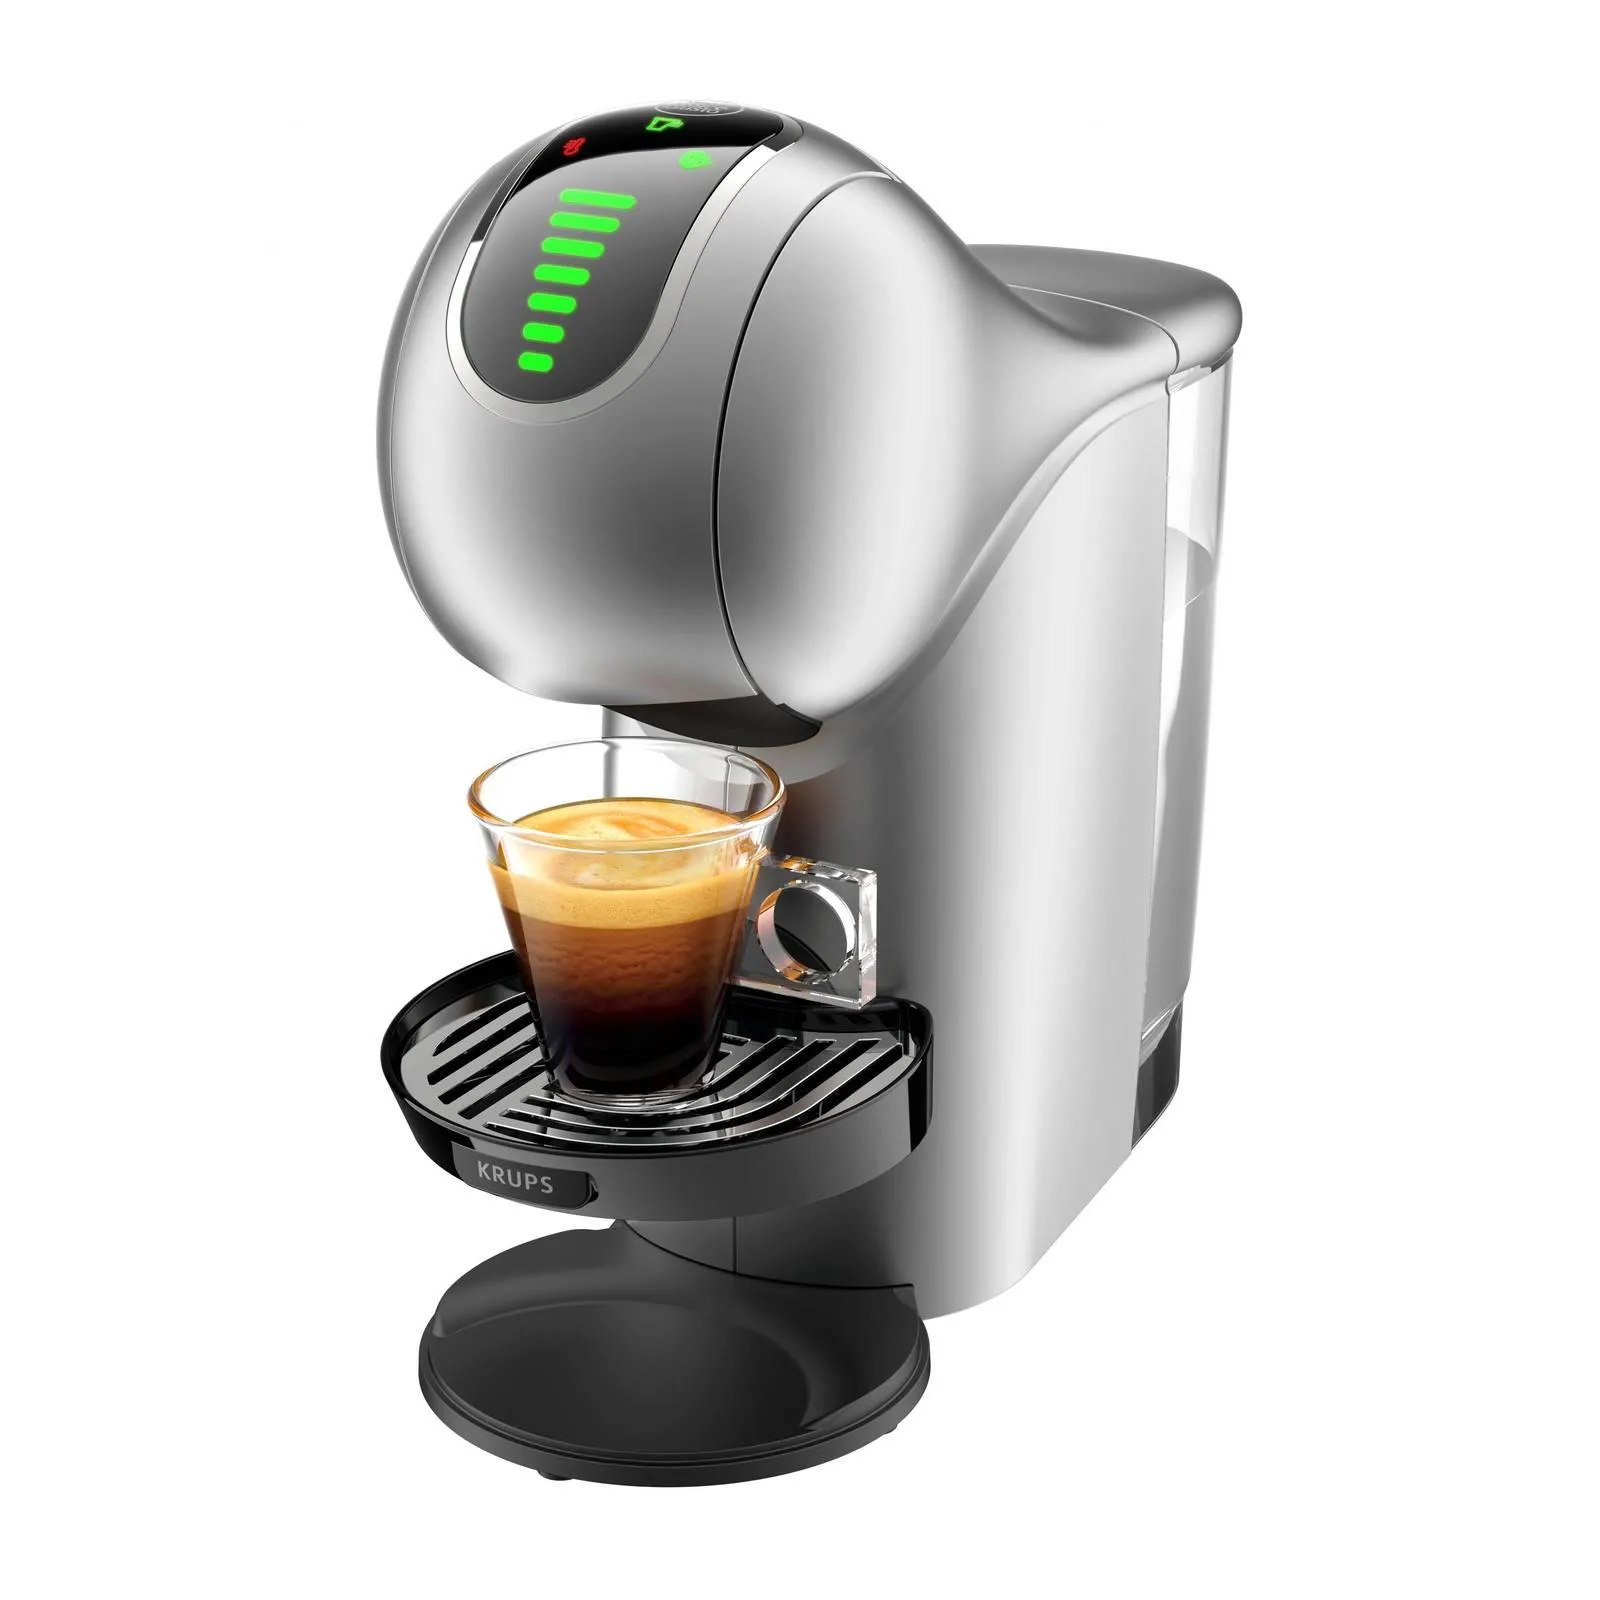 Macchine per il caffè espresso metallizzate, nere o rosse - Cose di Casa